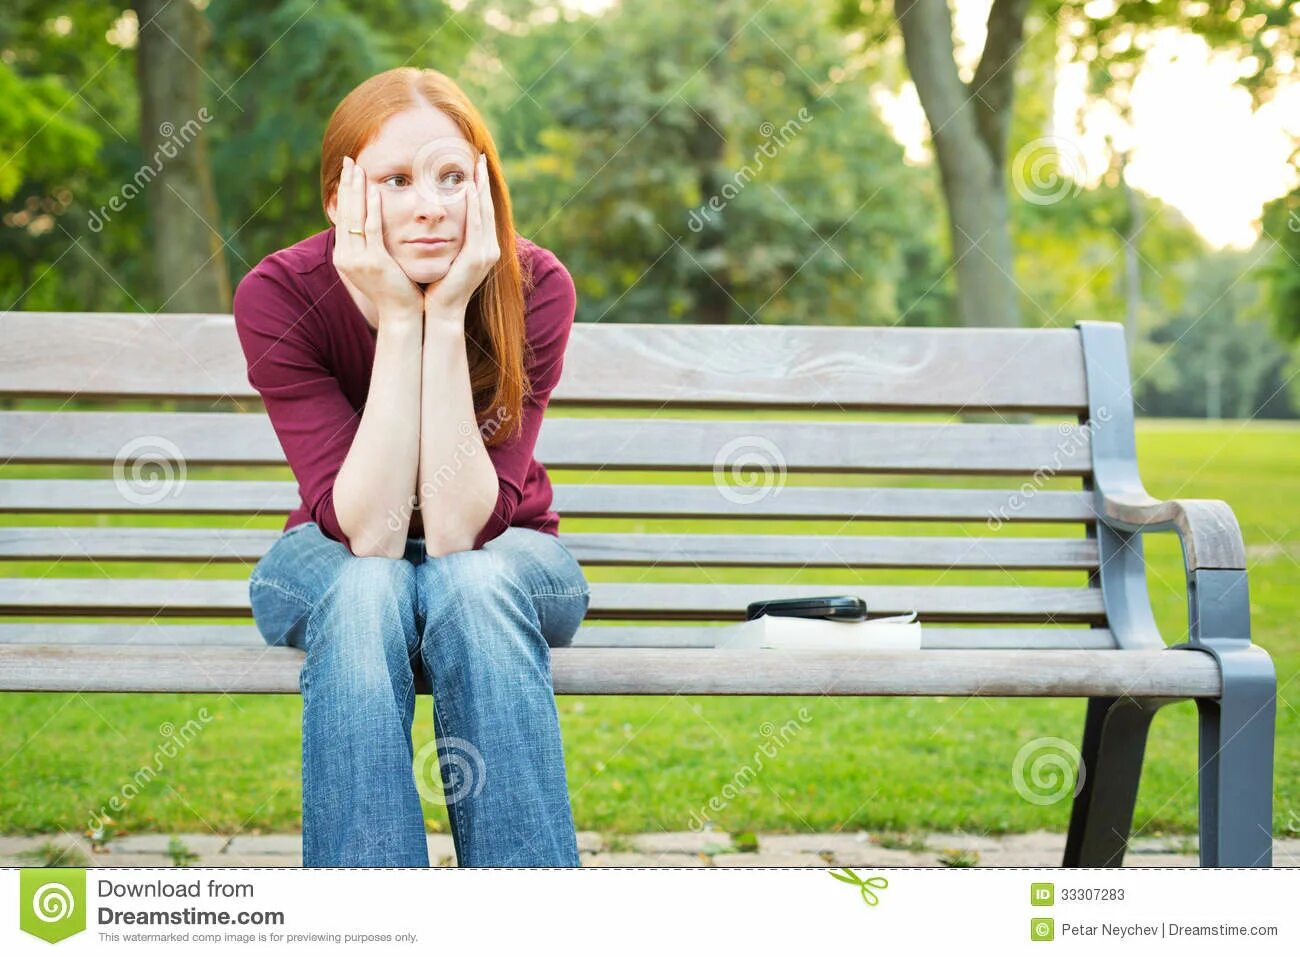 Молодой девушка сидят лице. Сидит на скамейке. Человек на скамейке. Человек сидит на скамейке. Девушка на скамейке.